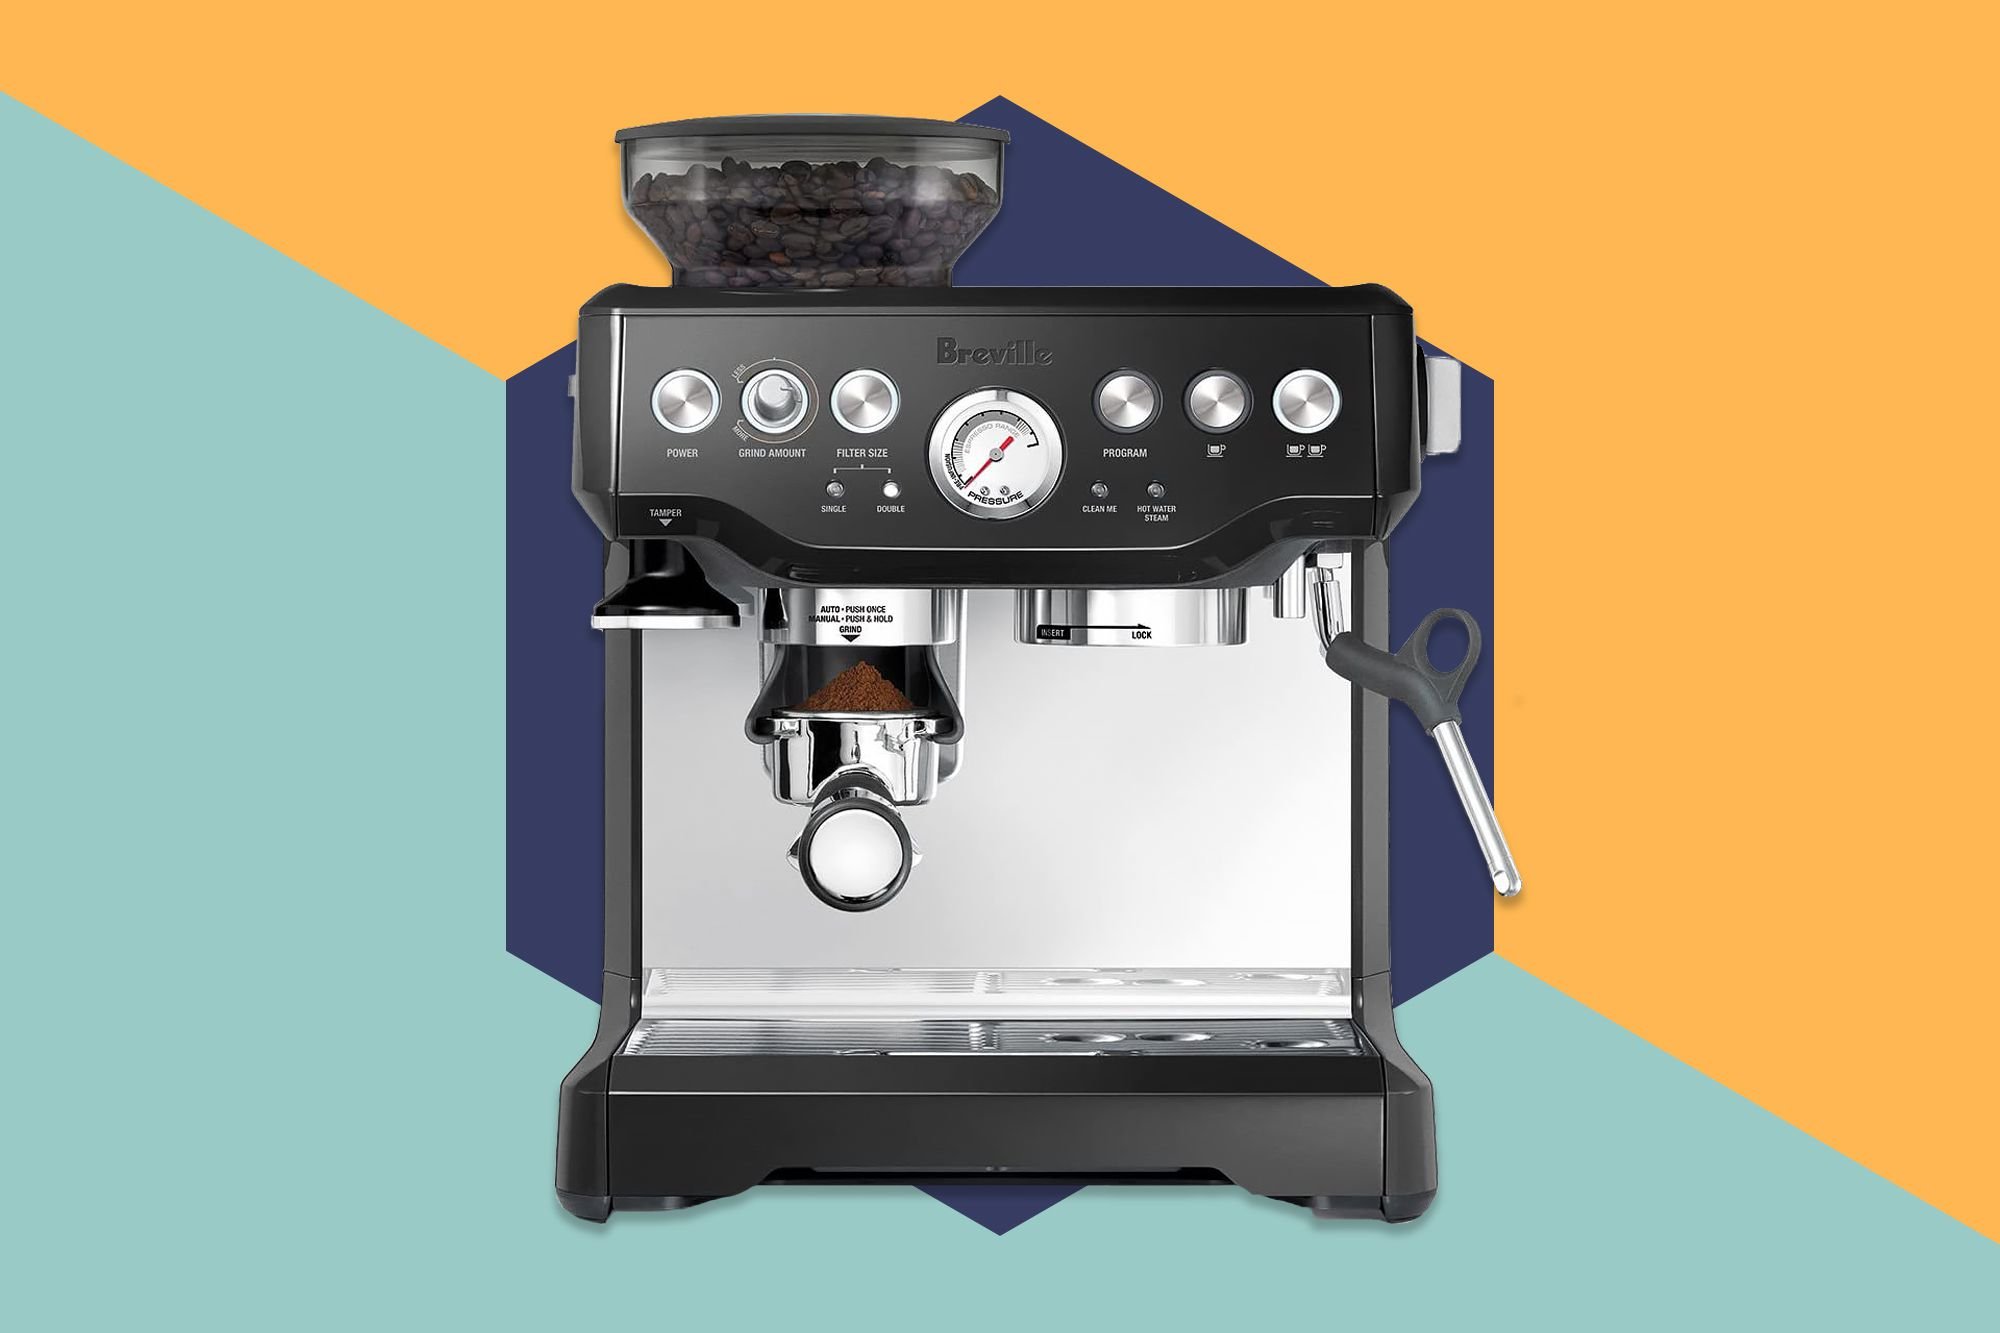 Breville Espresso Machines Are Still Going for $100 Off at Amazon